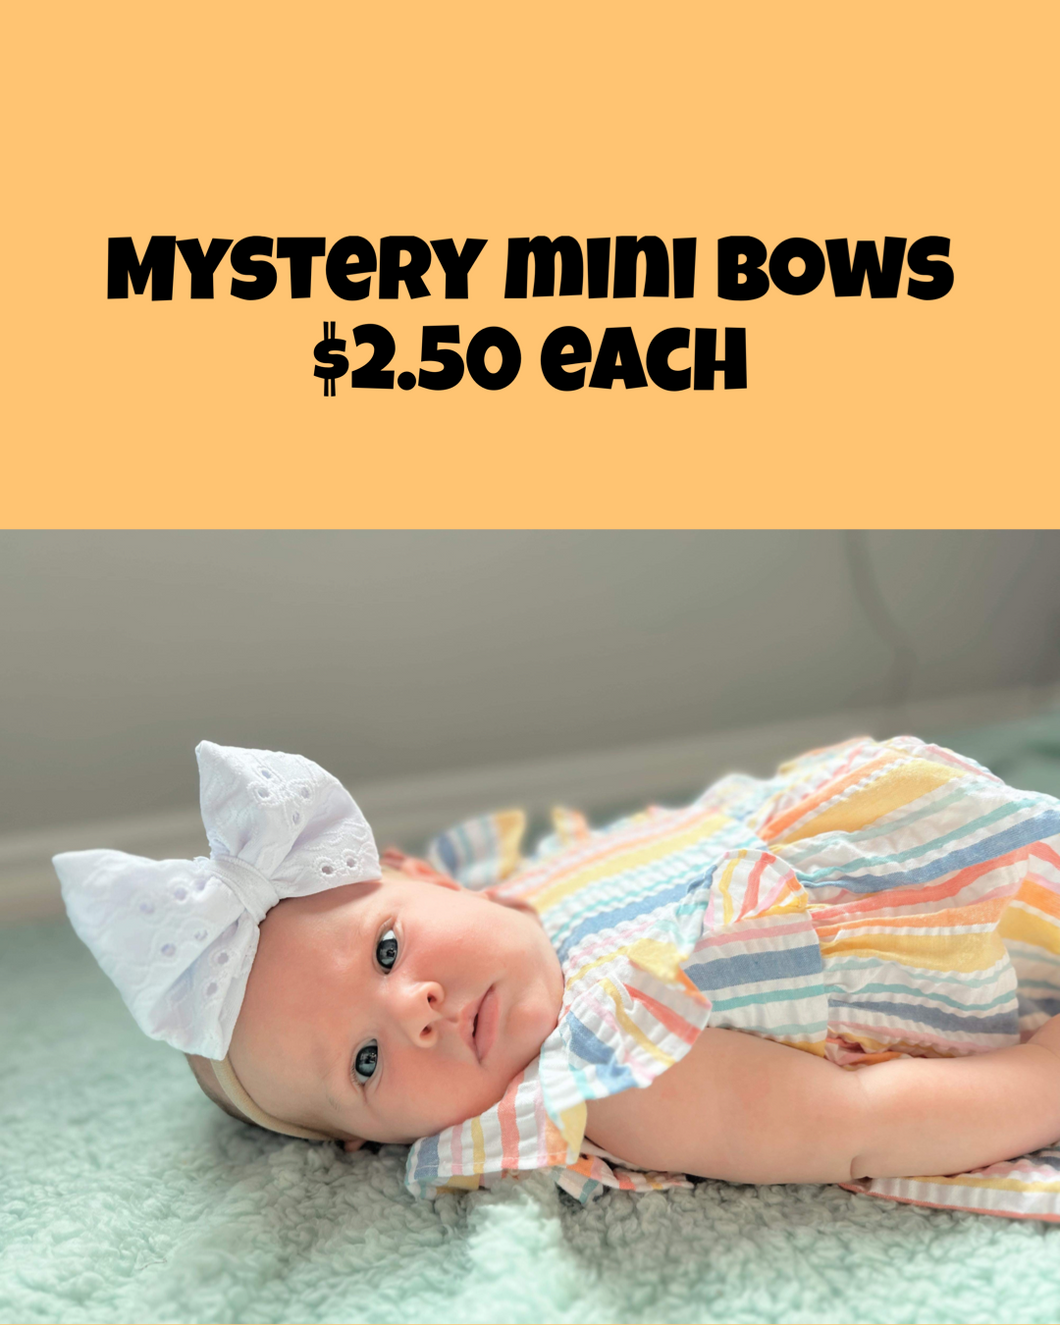 Mystery mini bows